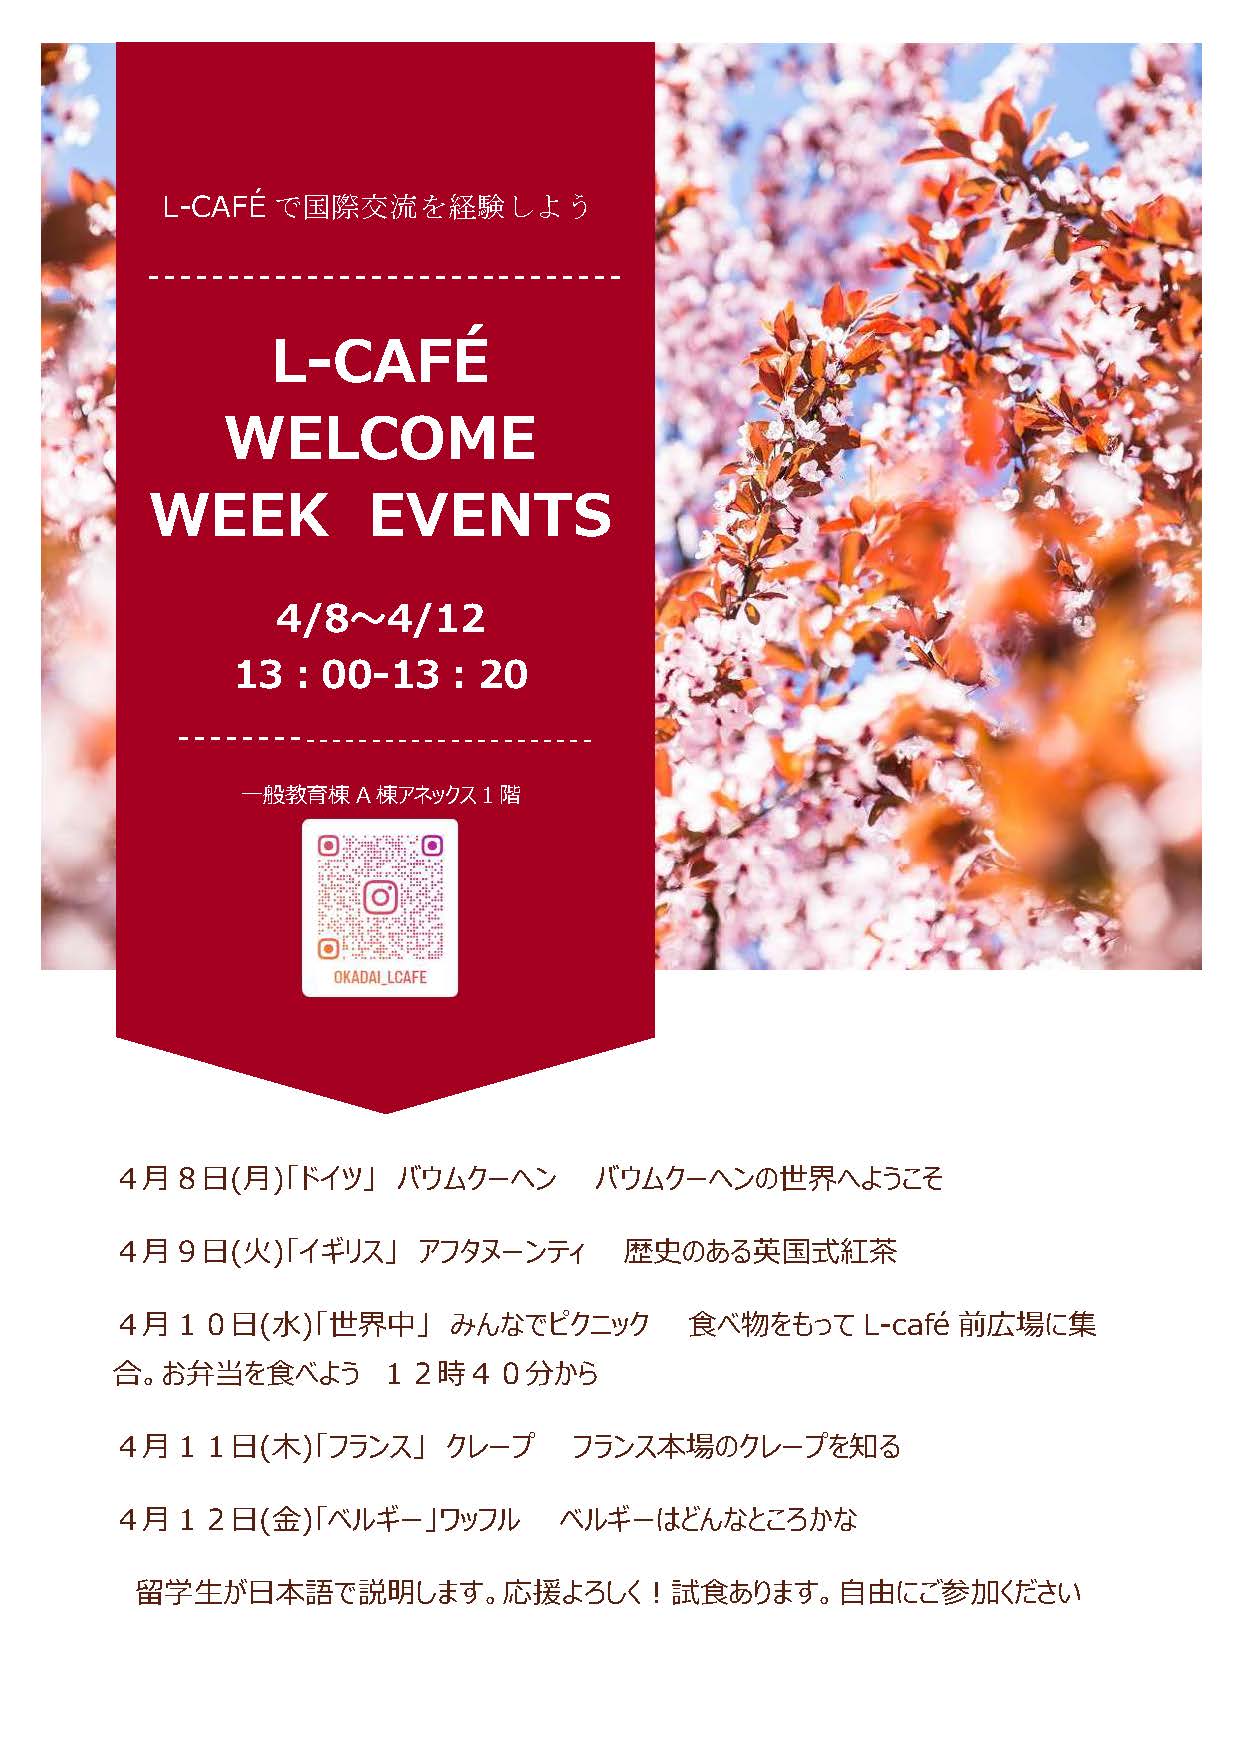 L-CAFÉ WELCOME WEEK EVENTS